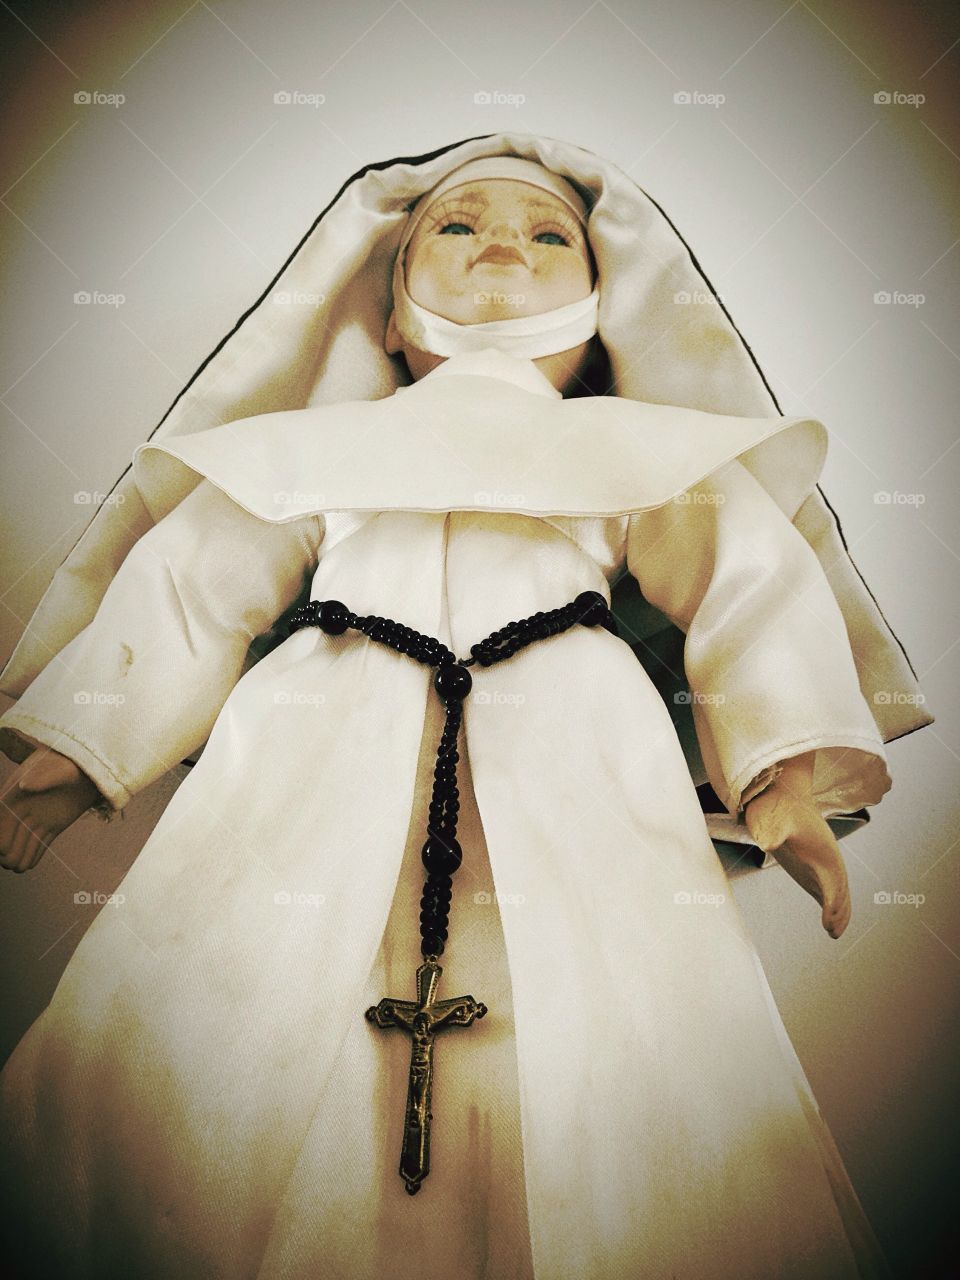 Catholic nun doll with rosary beads 